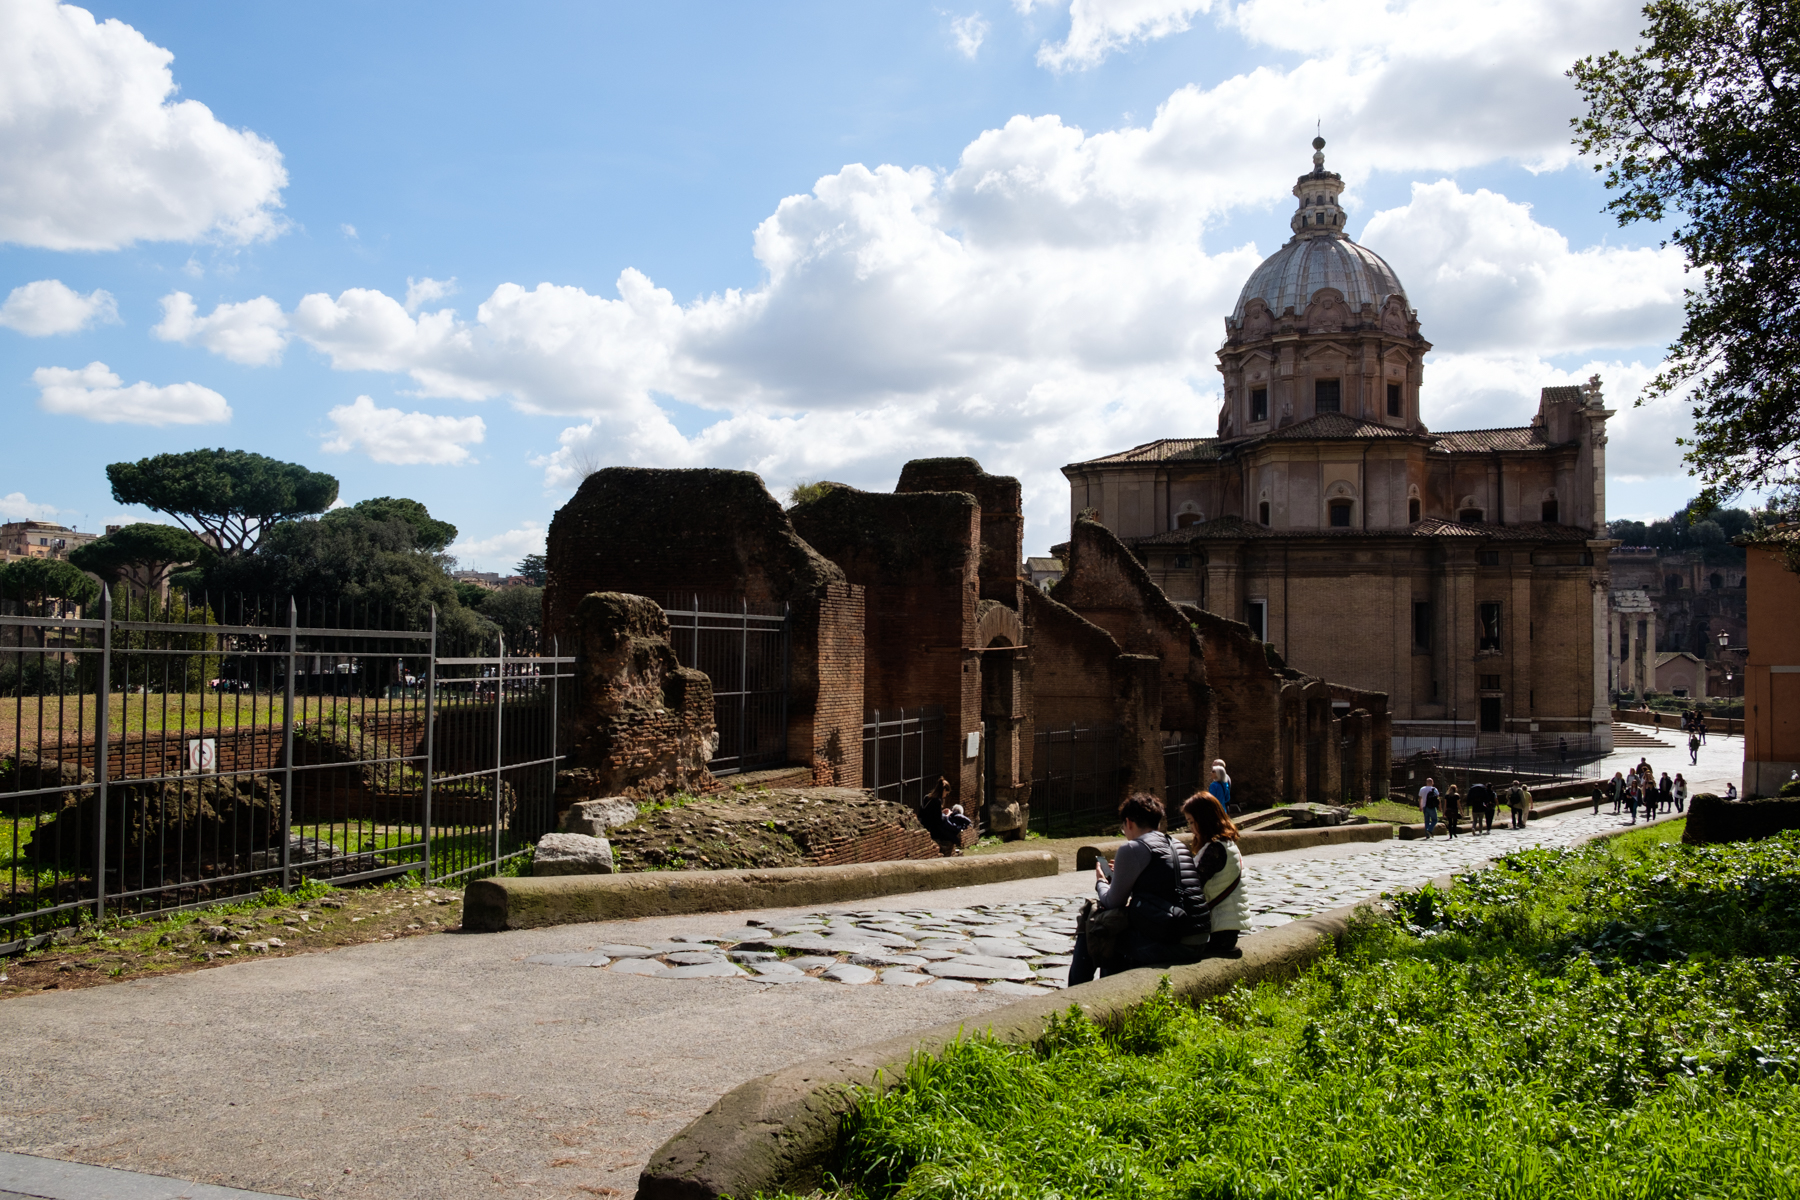 Rome—Ancient-City